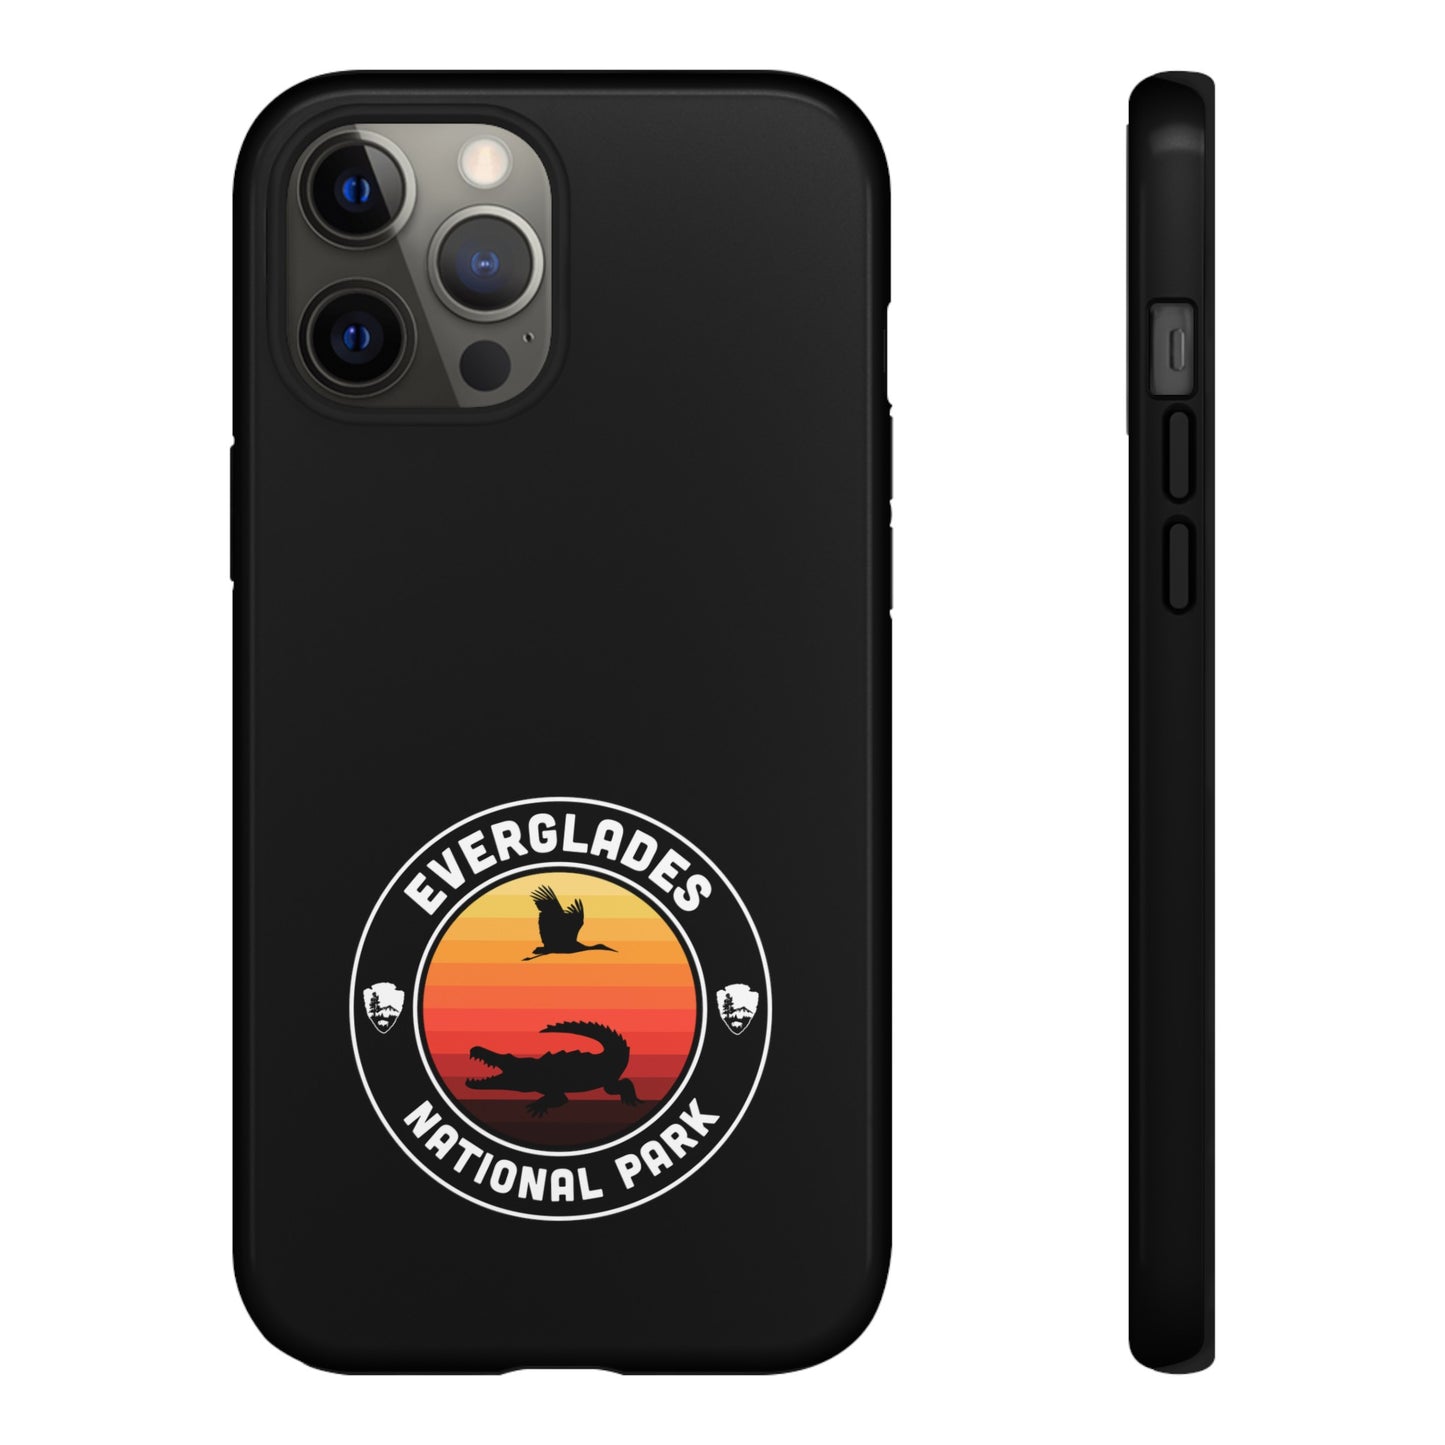 Everglades National Park Phone Case - Round Emblem Design